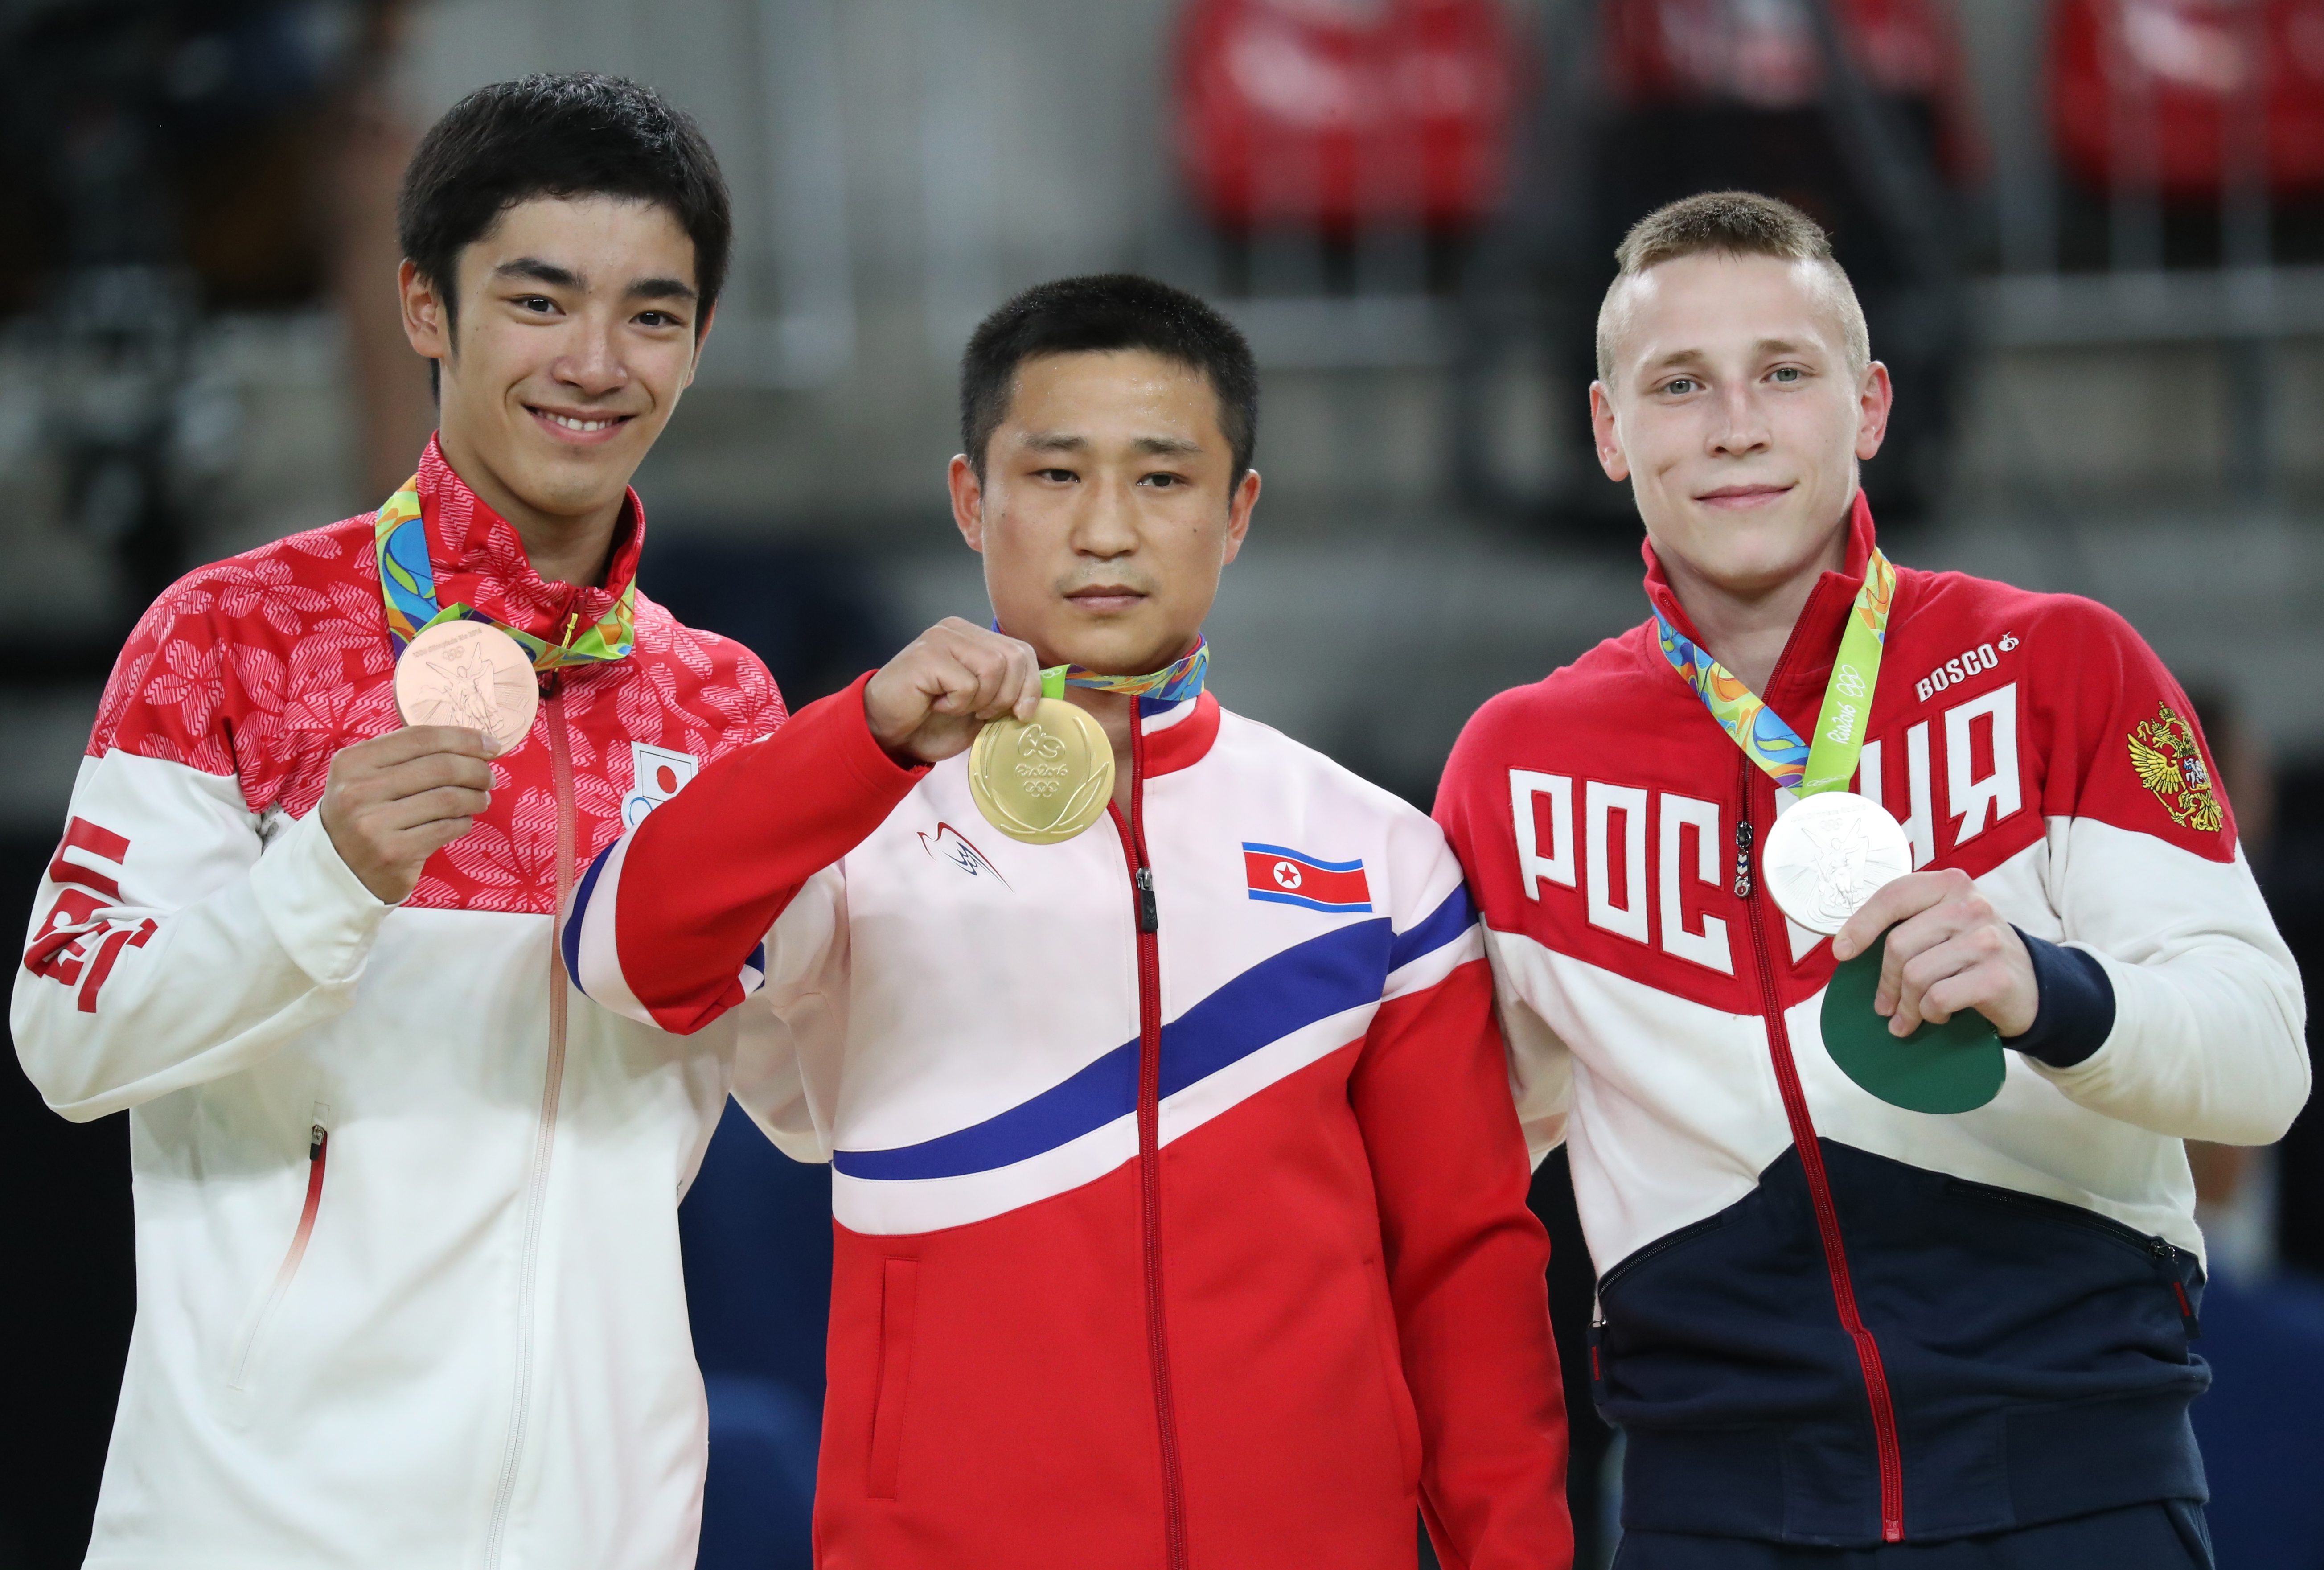 Peraih medali emas asal Korea Utara, Ri Se Gwang (tengah), tidak tersenyum saat di podium Olimpiade Rio, pada 15 Agustus 2016. Foto oleh Tatyana Zenkovich/EPA 